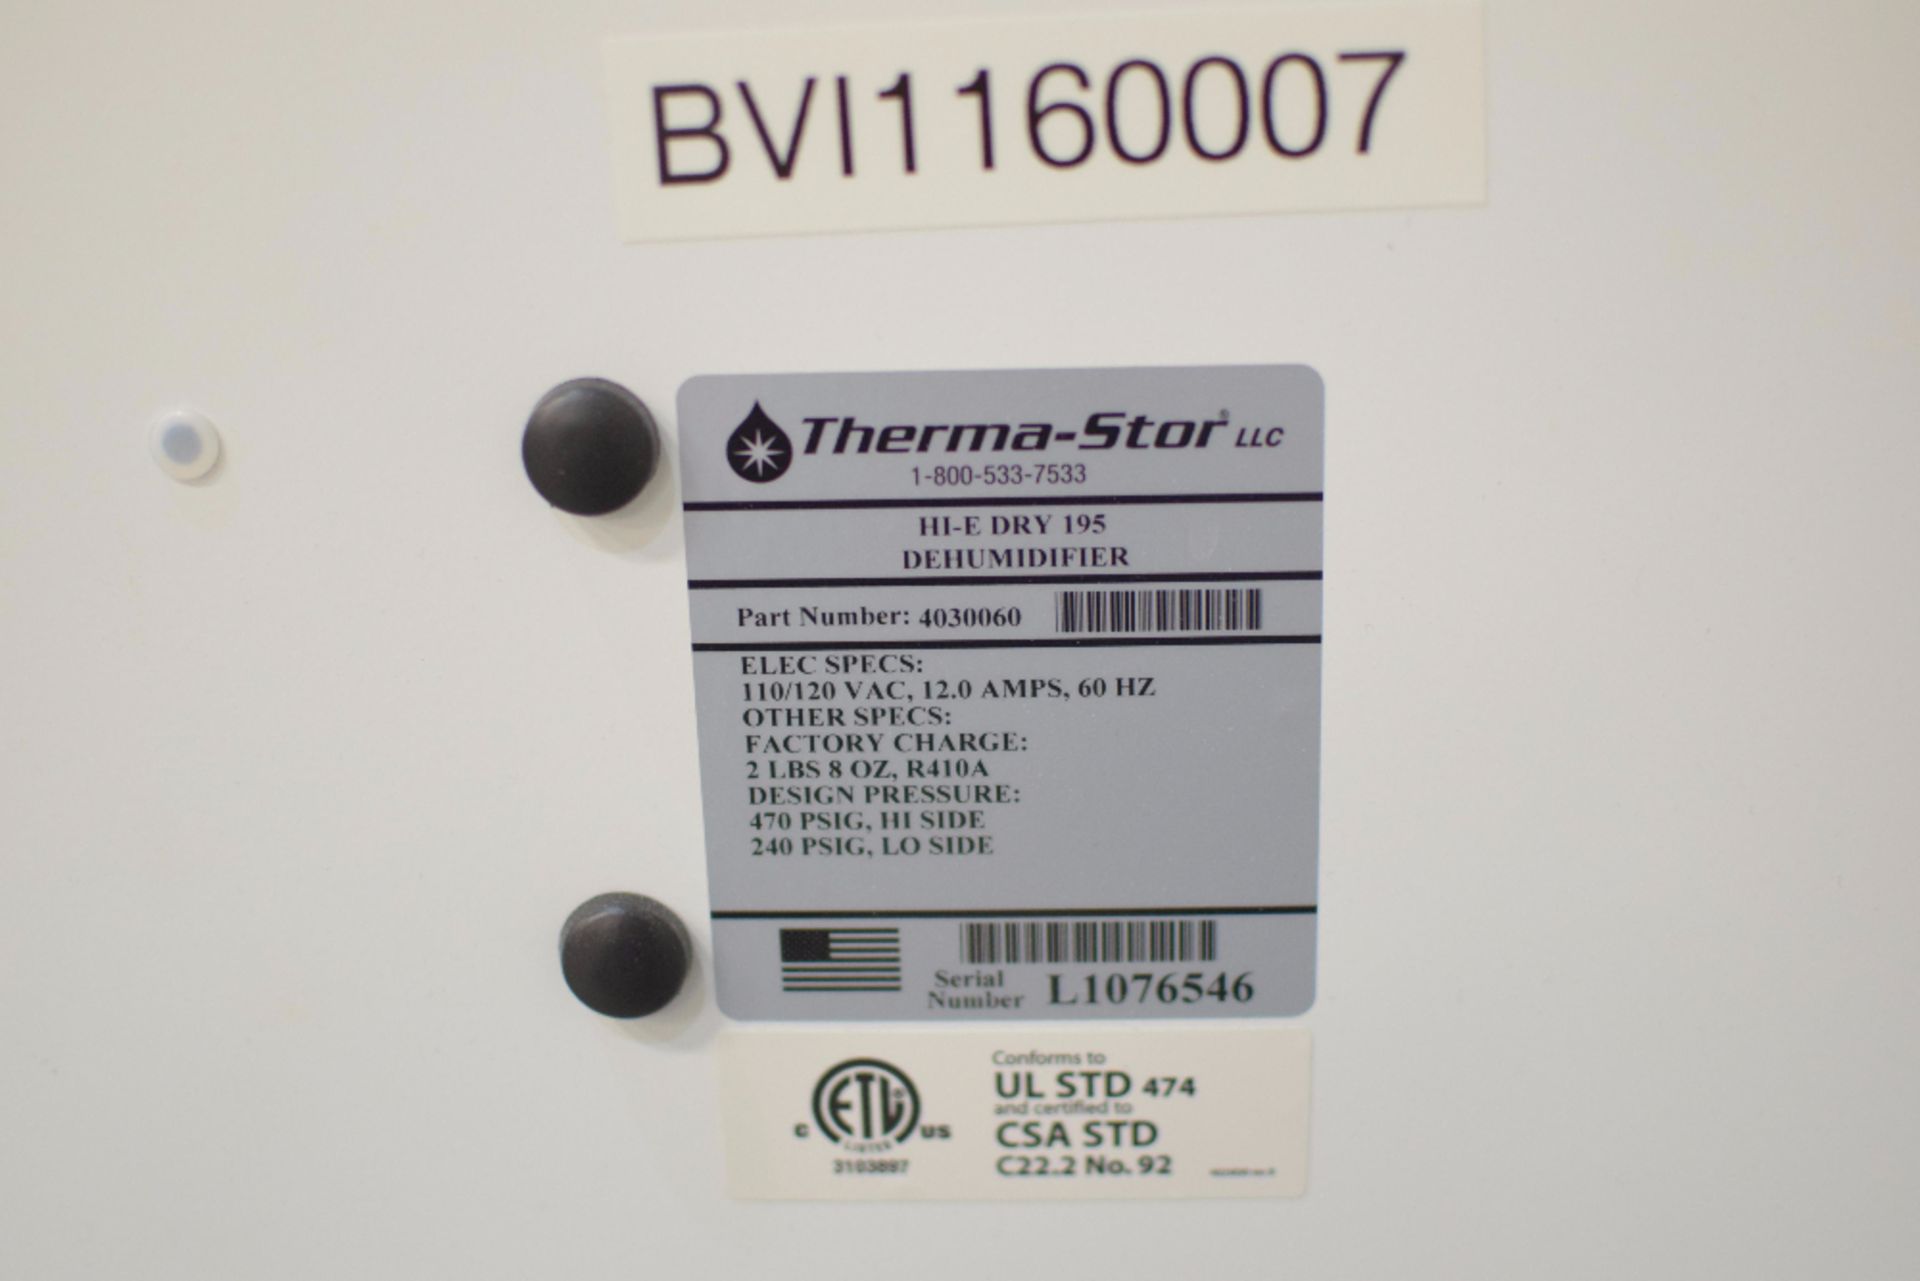 Therma-Stor HI-E Dry 195 Dehumidifier - Image 3 of 3